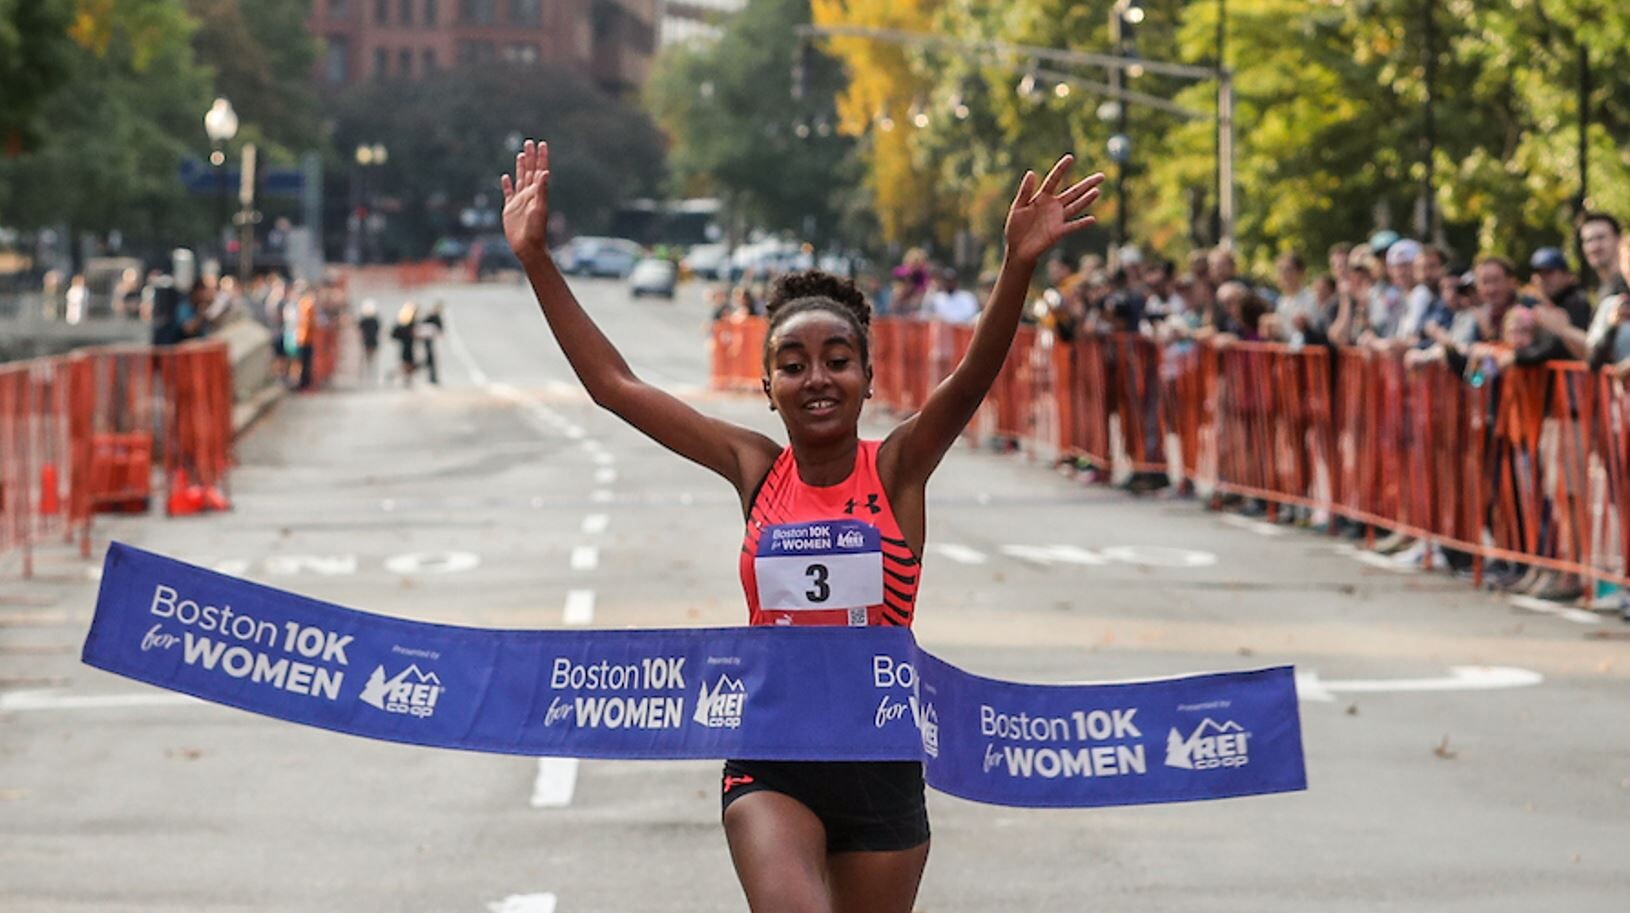 24-year-old Weini Kelati Sets New American Record During Women’s 10K Race In Boston